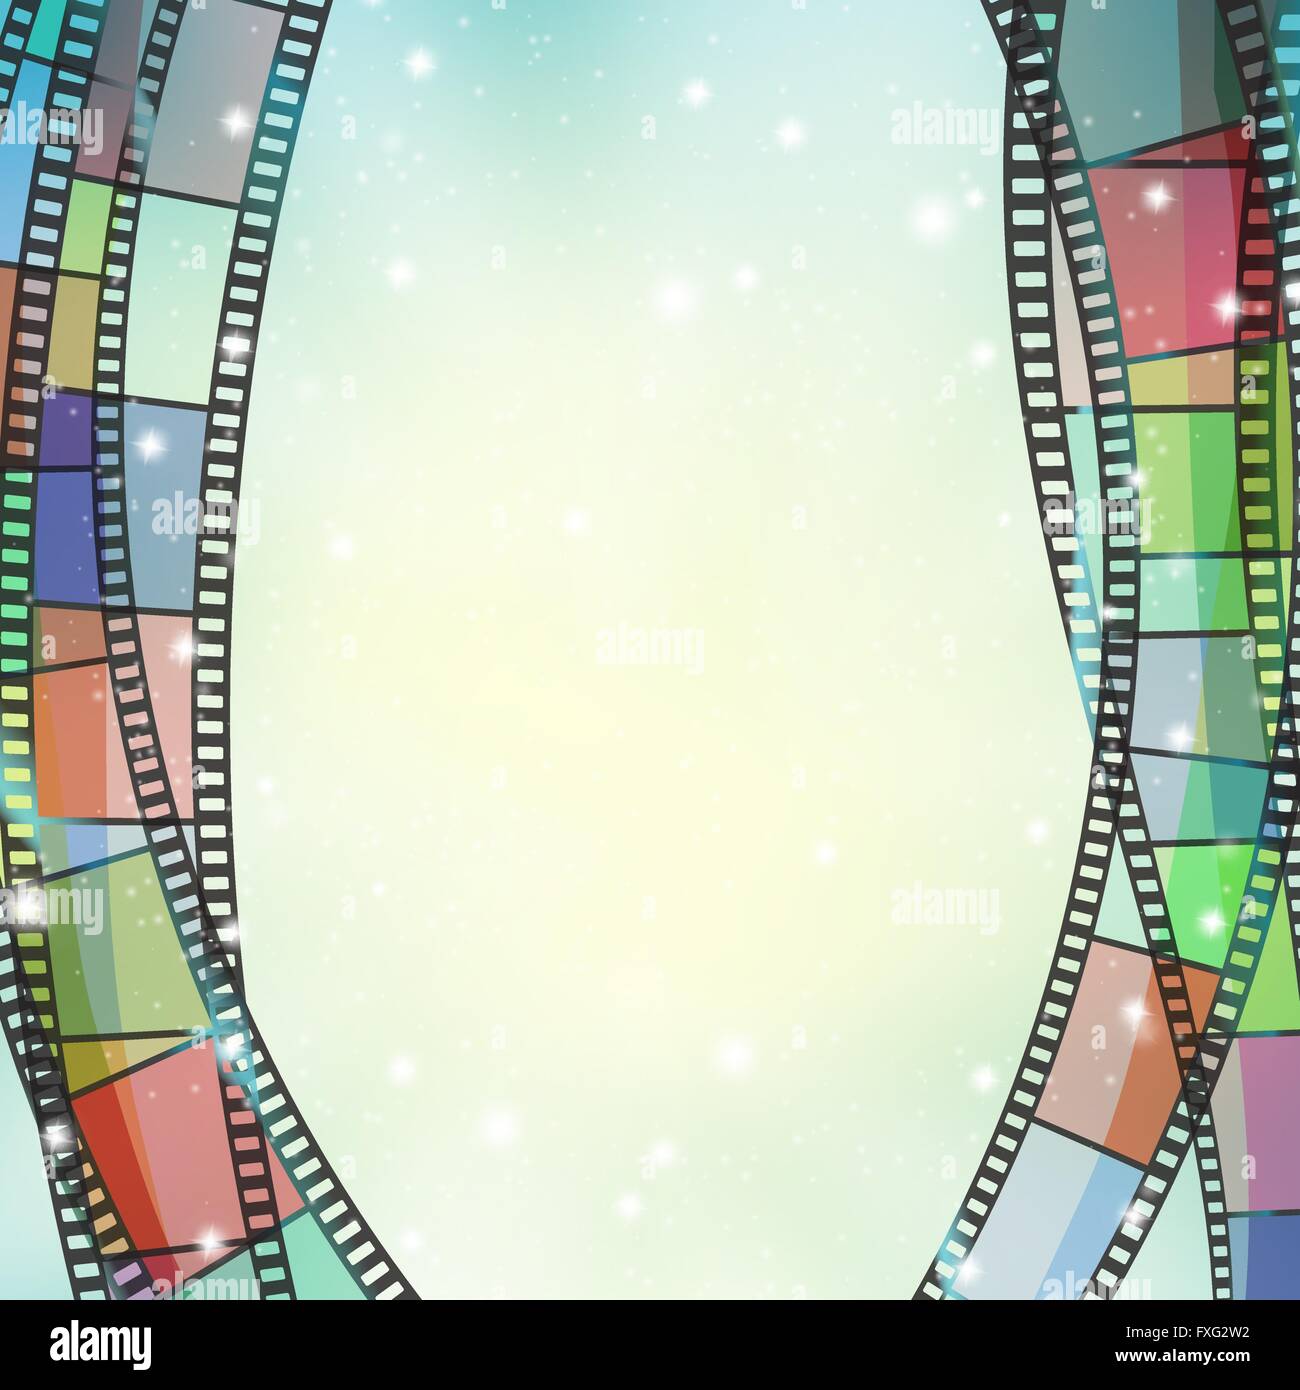 35 mm movie Film reel stock illustration. Illustration of color